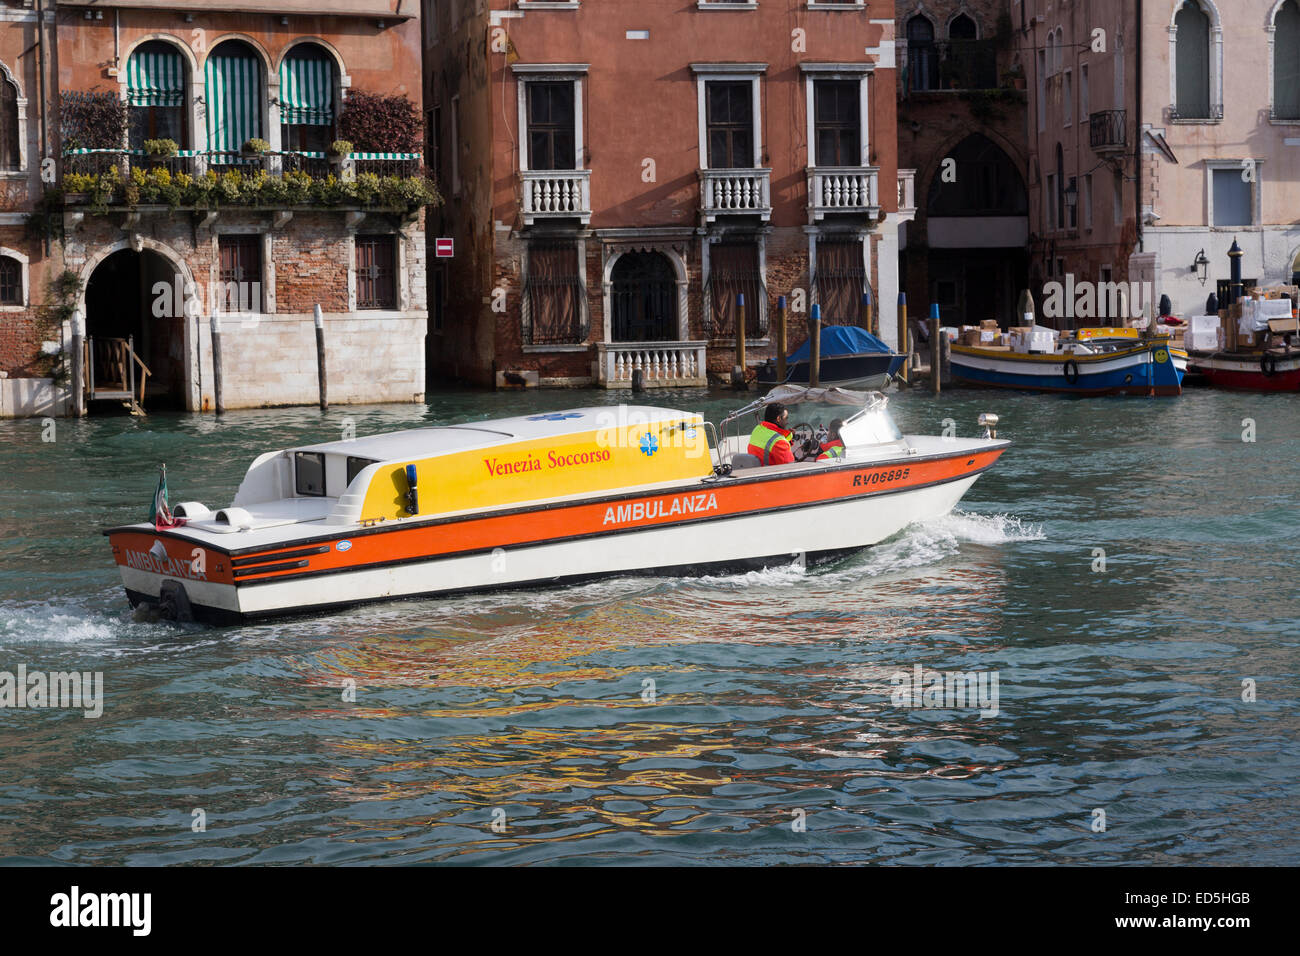 Venetian water ambulance, Grand Canal, Venice, Italy Stock Photo